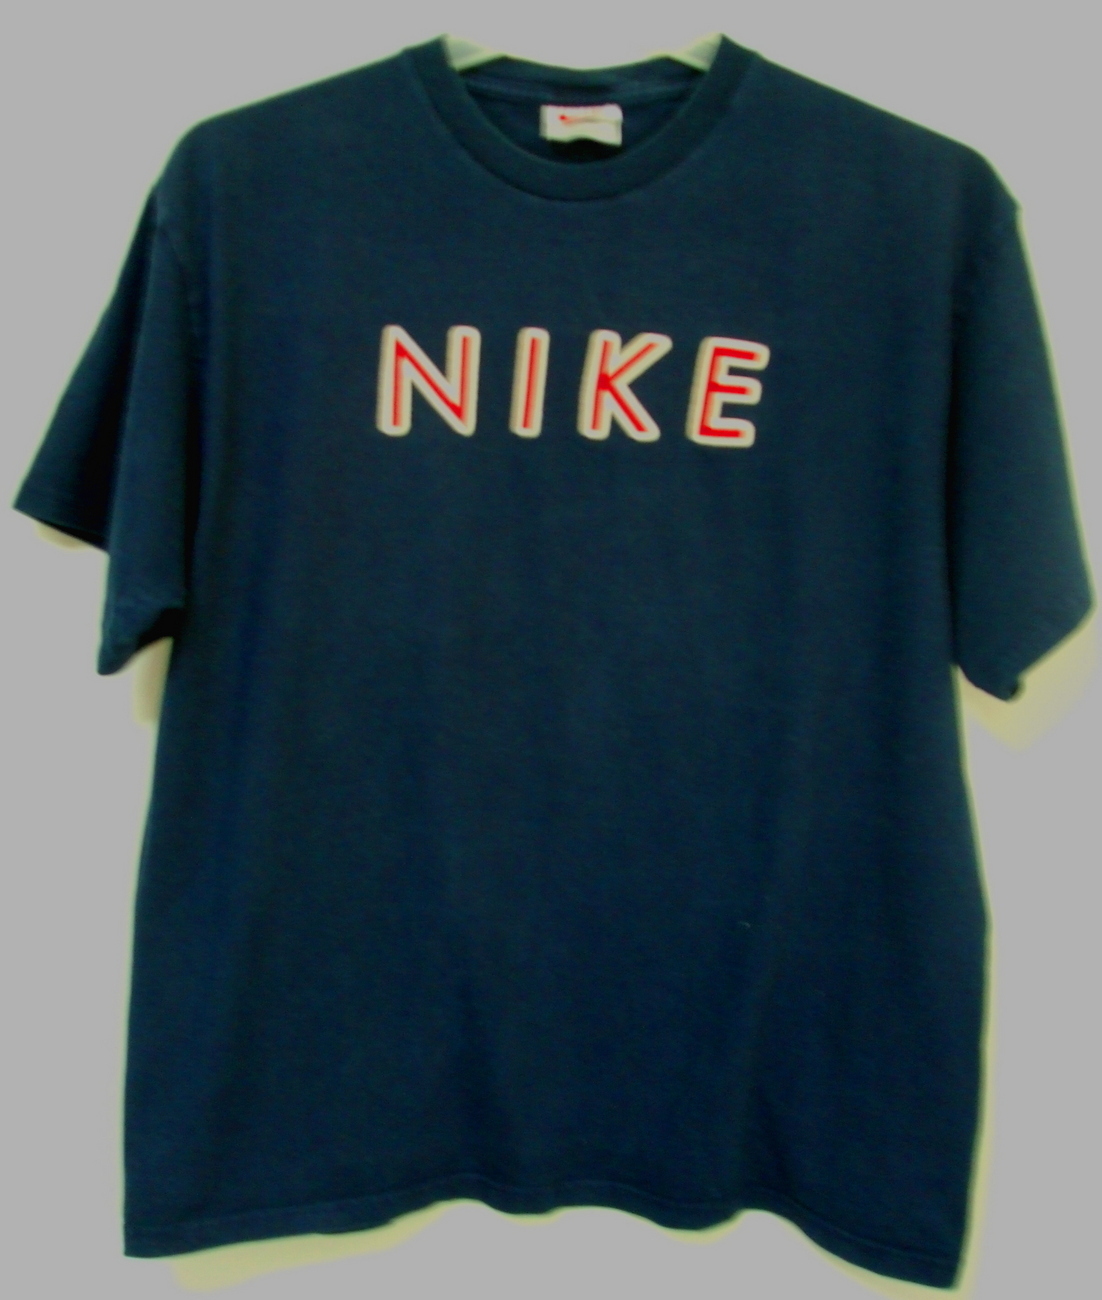 Mens Nike Navy Blue Short Sleeve T Shirt Size L - $7.95